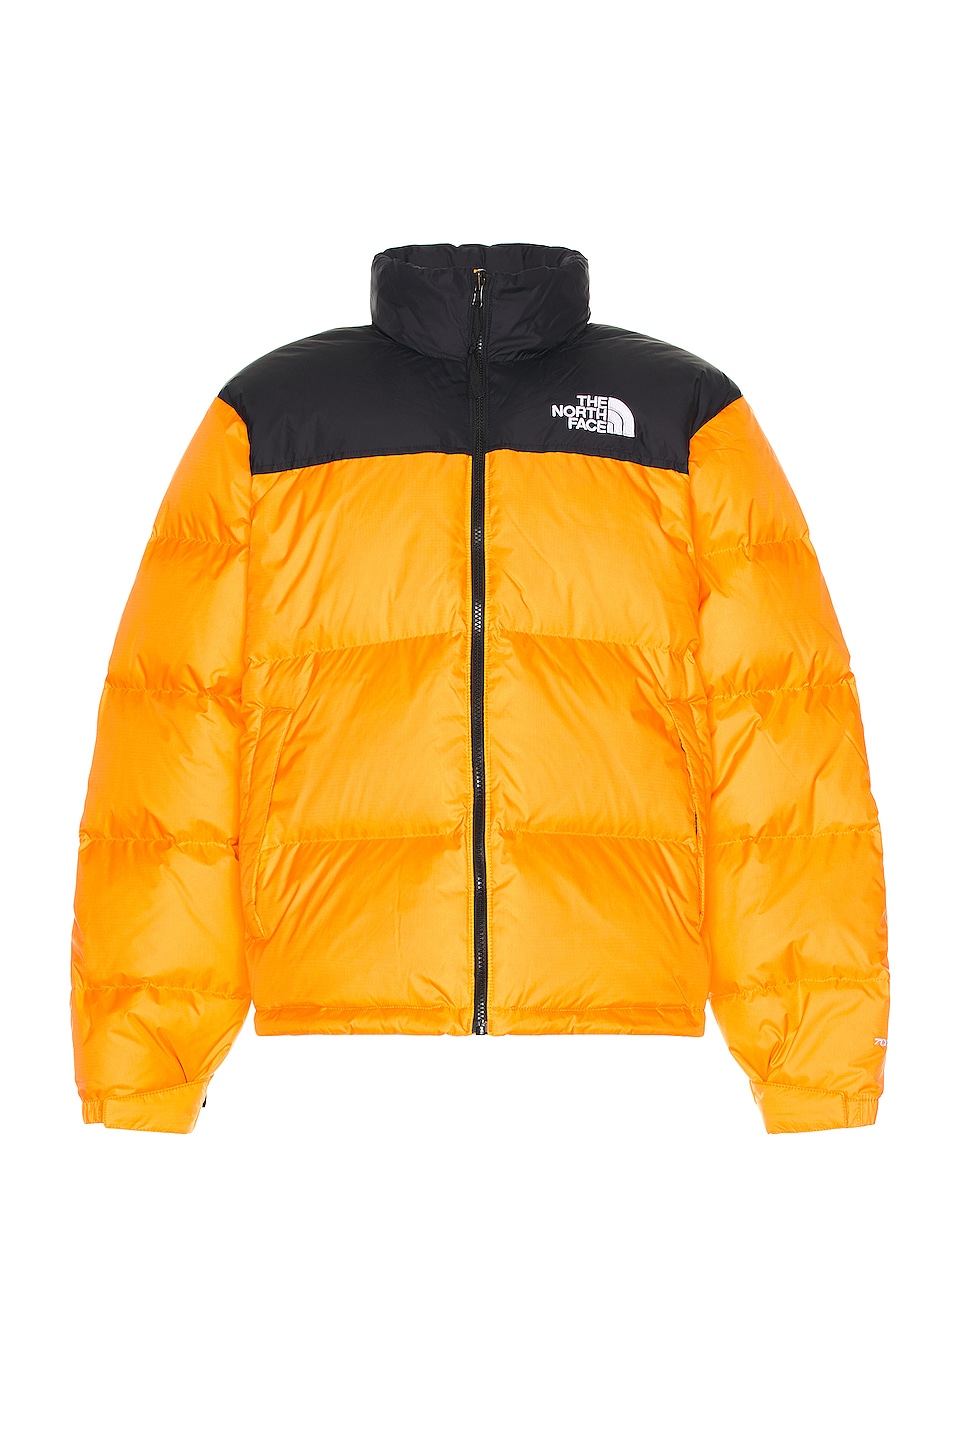 The North Face 1996 Retro Nuptse Jacket in Cone Orange | REVOLVE